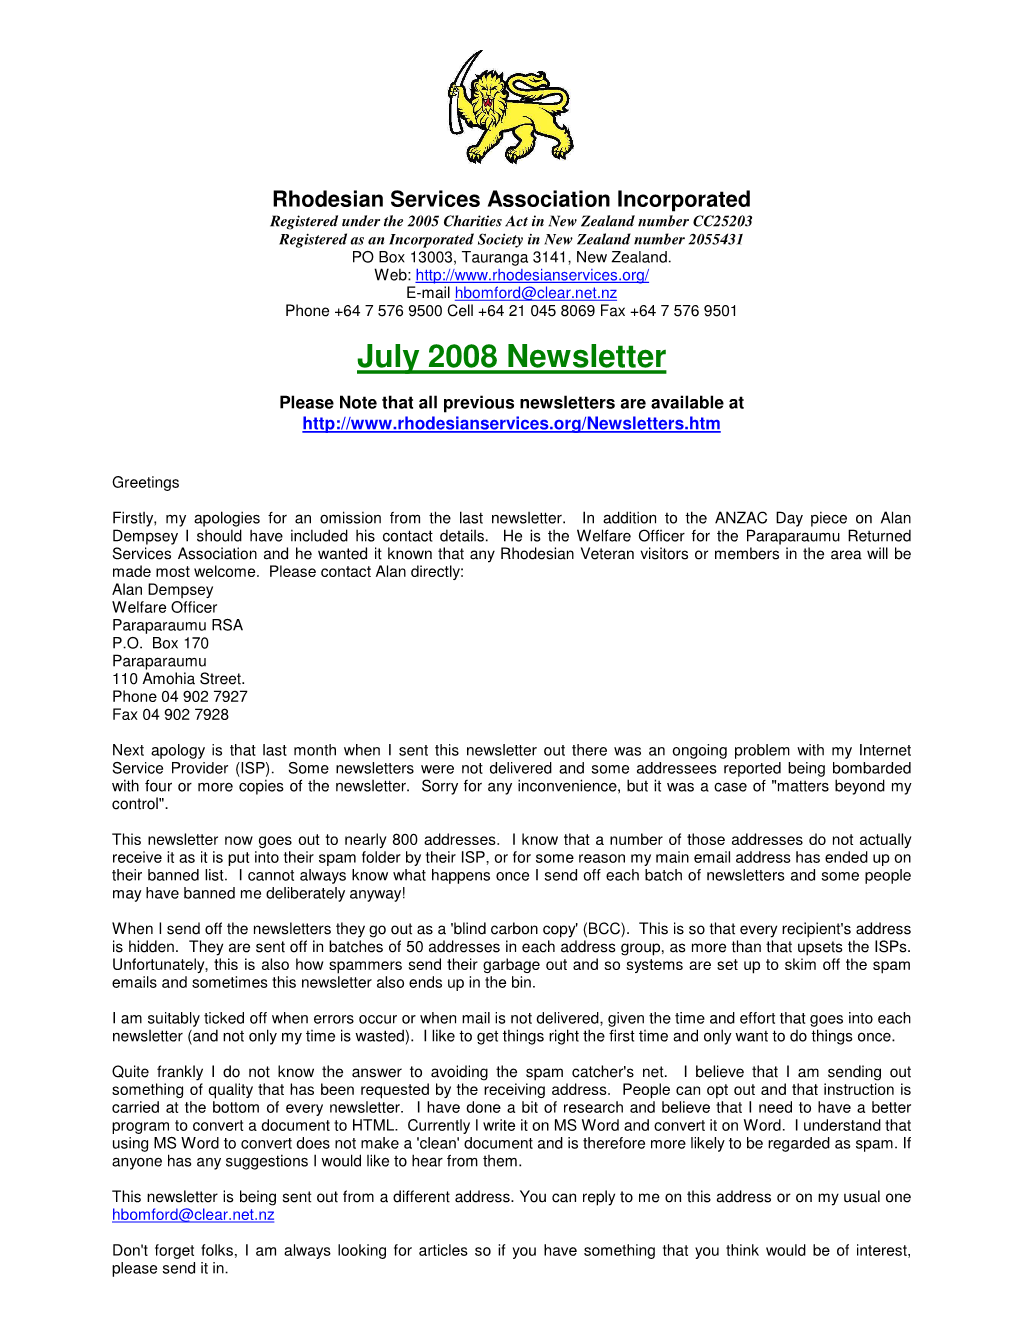 July 2008 Newsletter